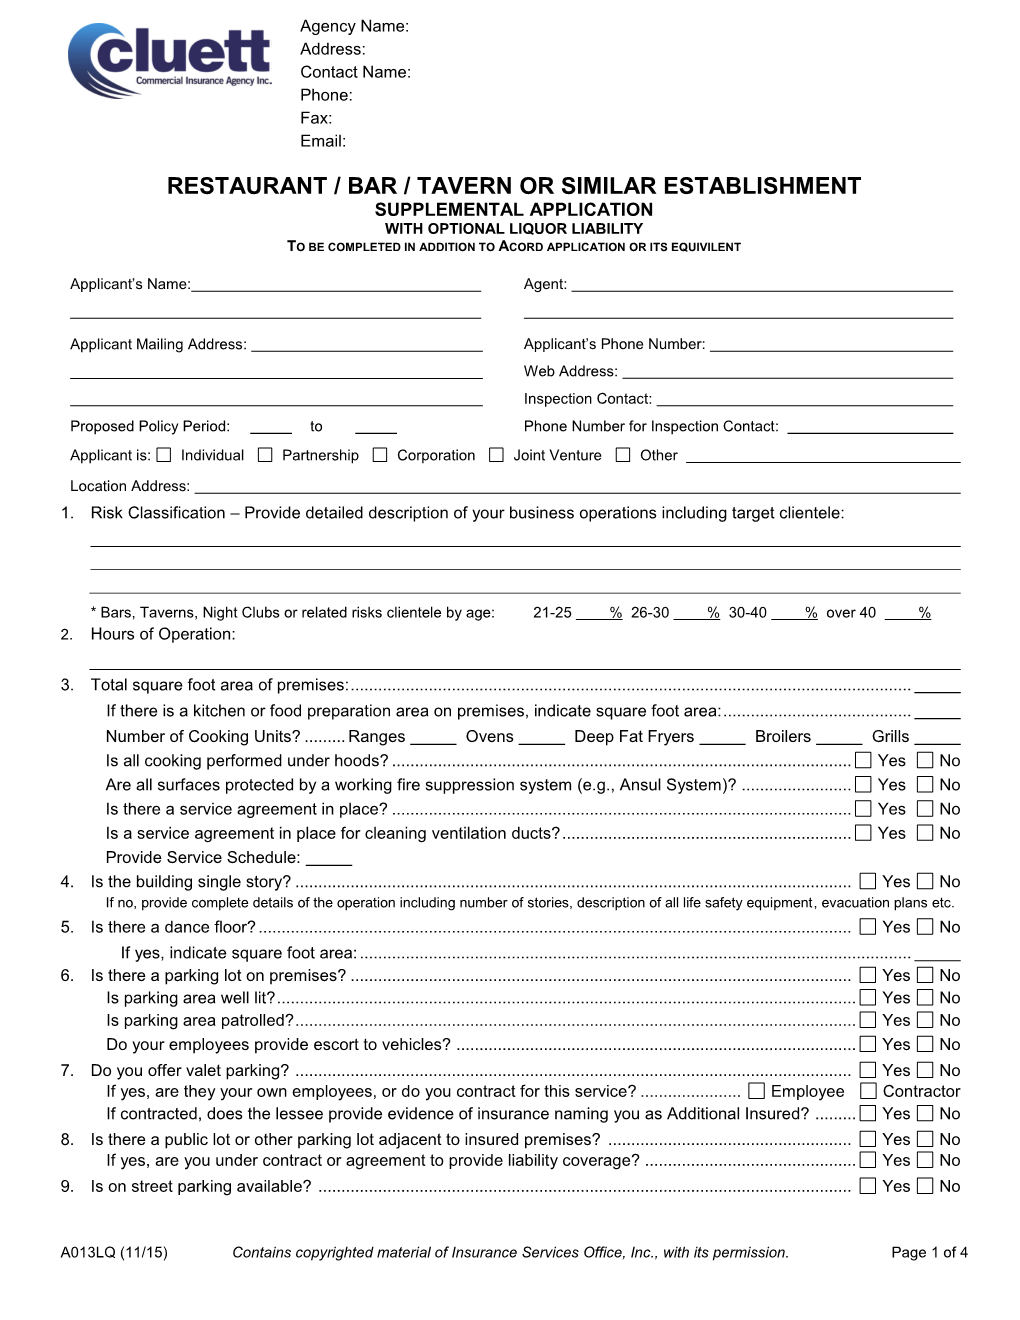 Restaurant/Bar/Tavern Supplemental Application